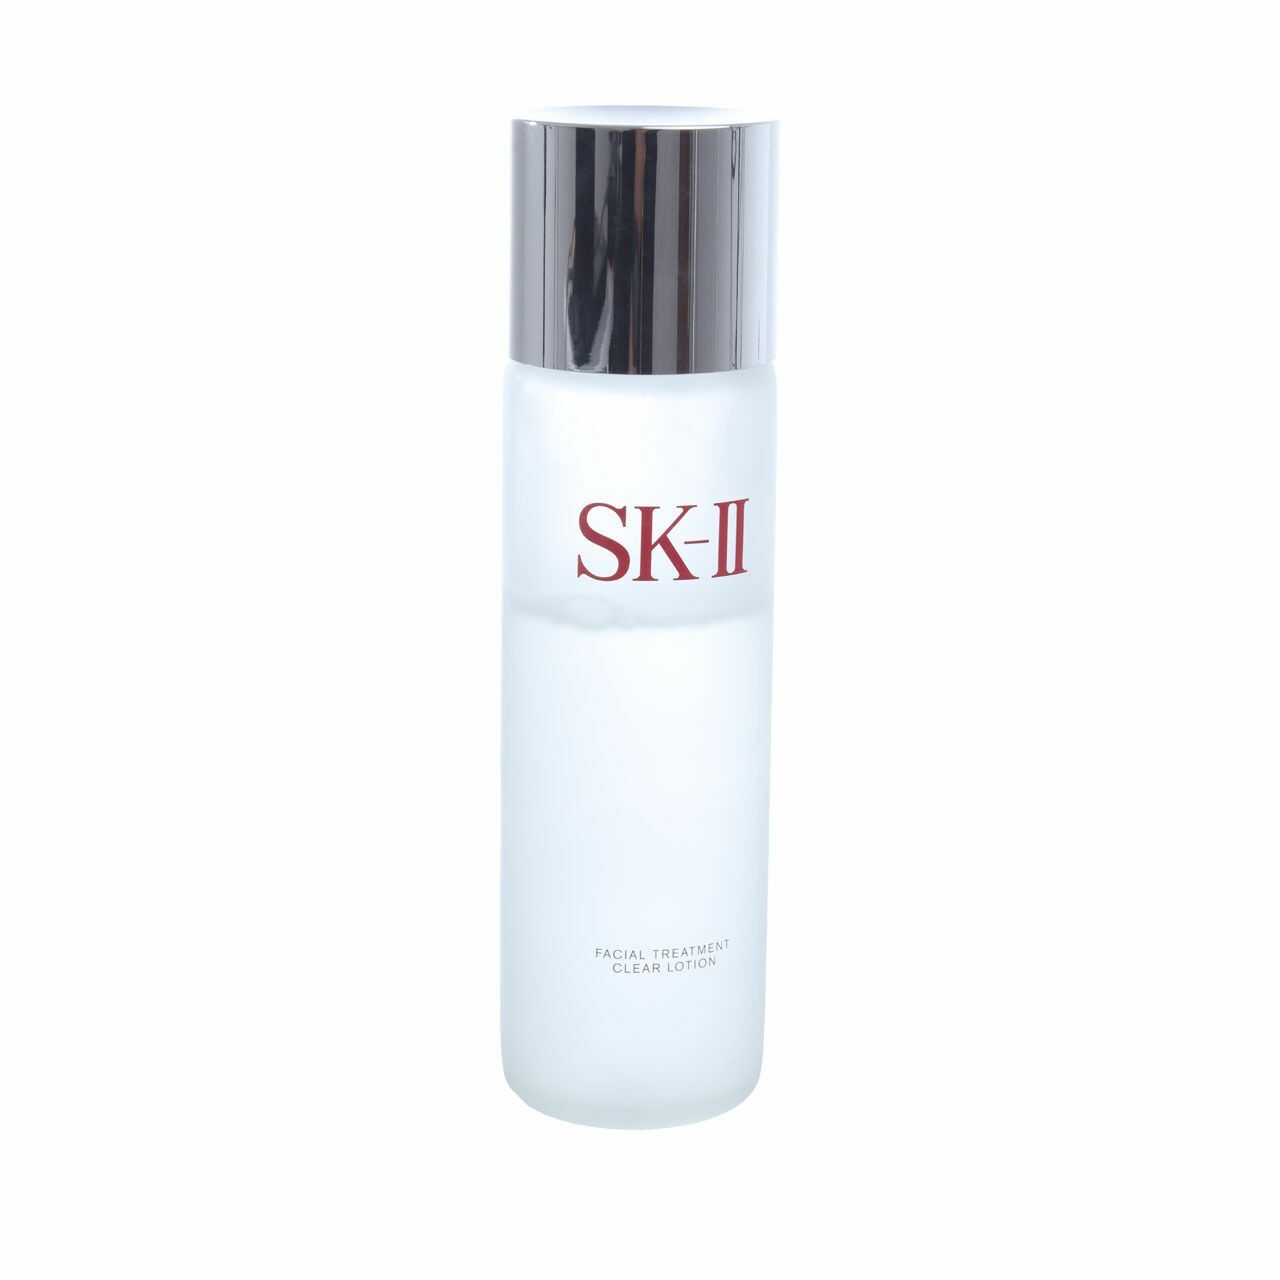 SK-II Facial Treatment Clear Lotion Skin Care